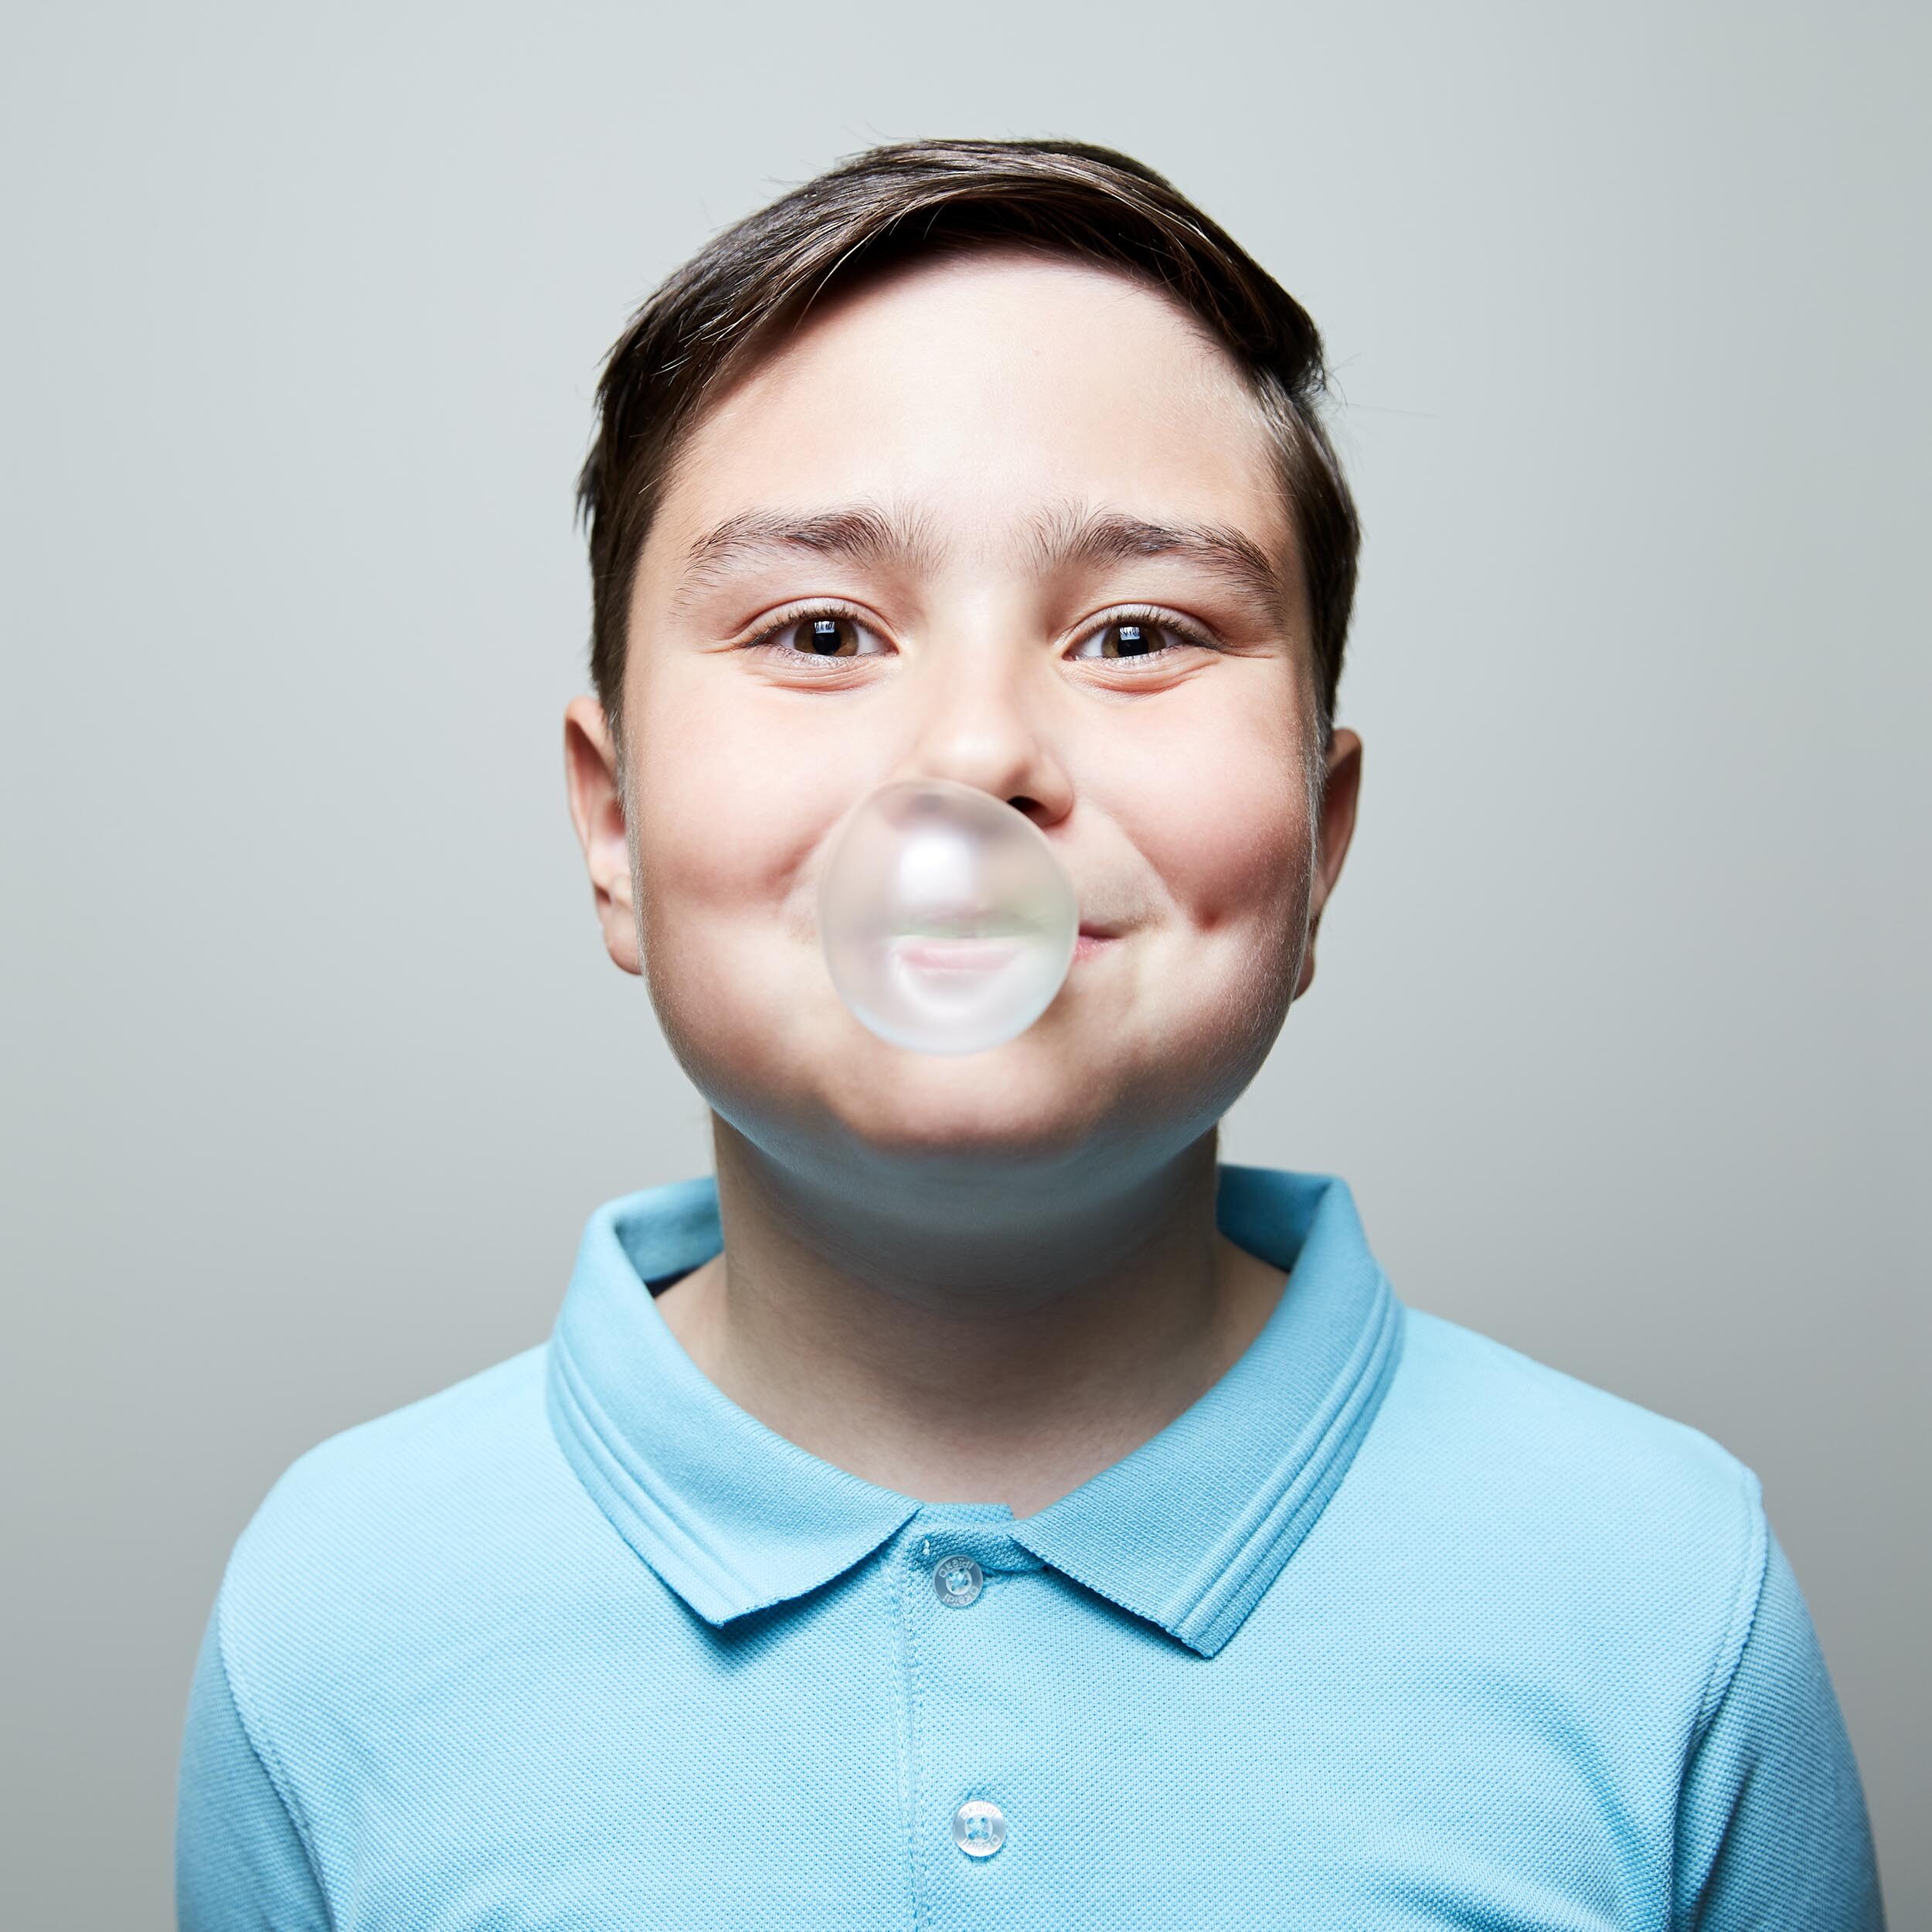 A boy in a blue shirt blowing a bubble gum.